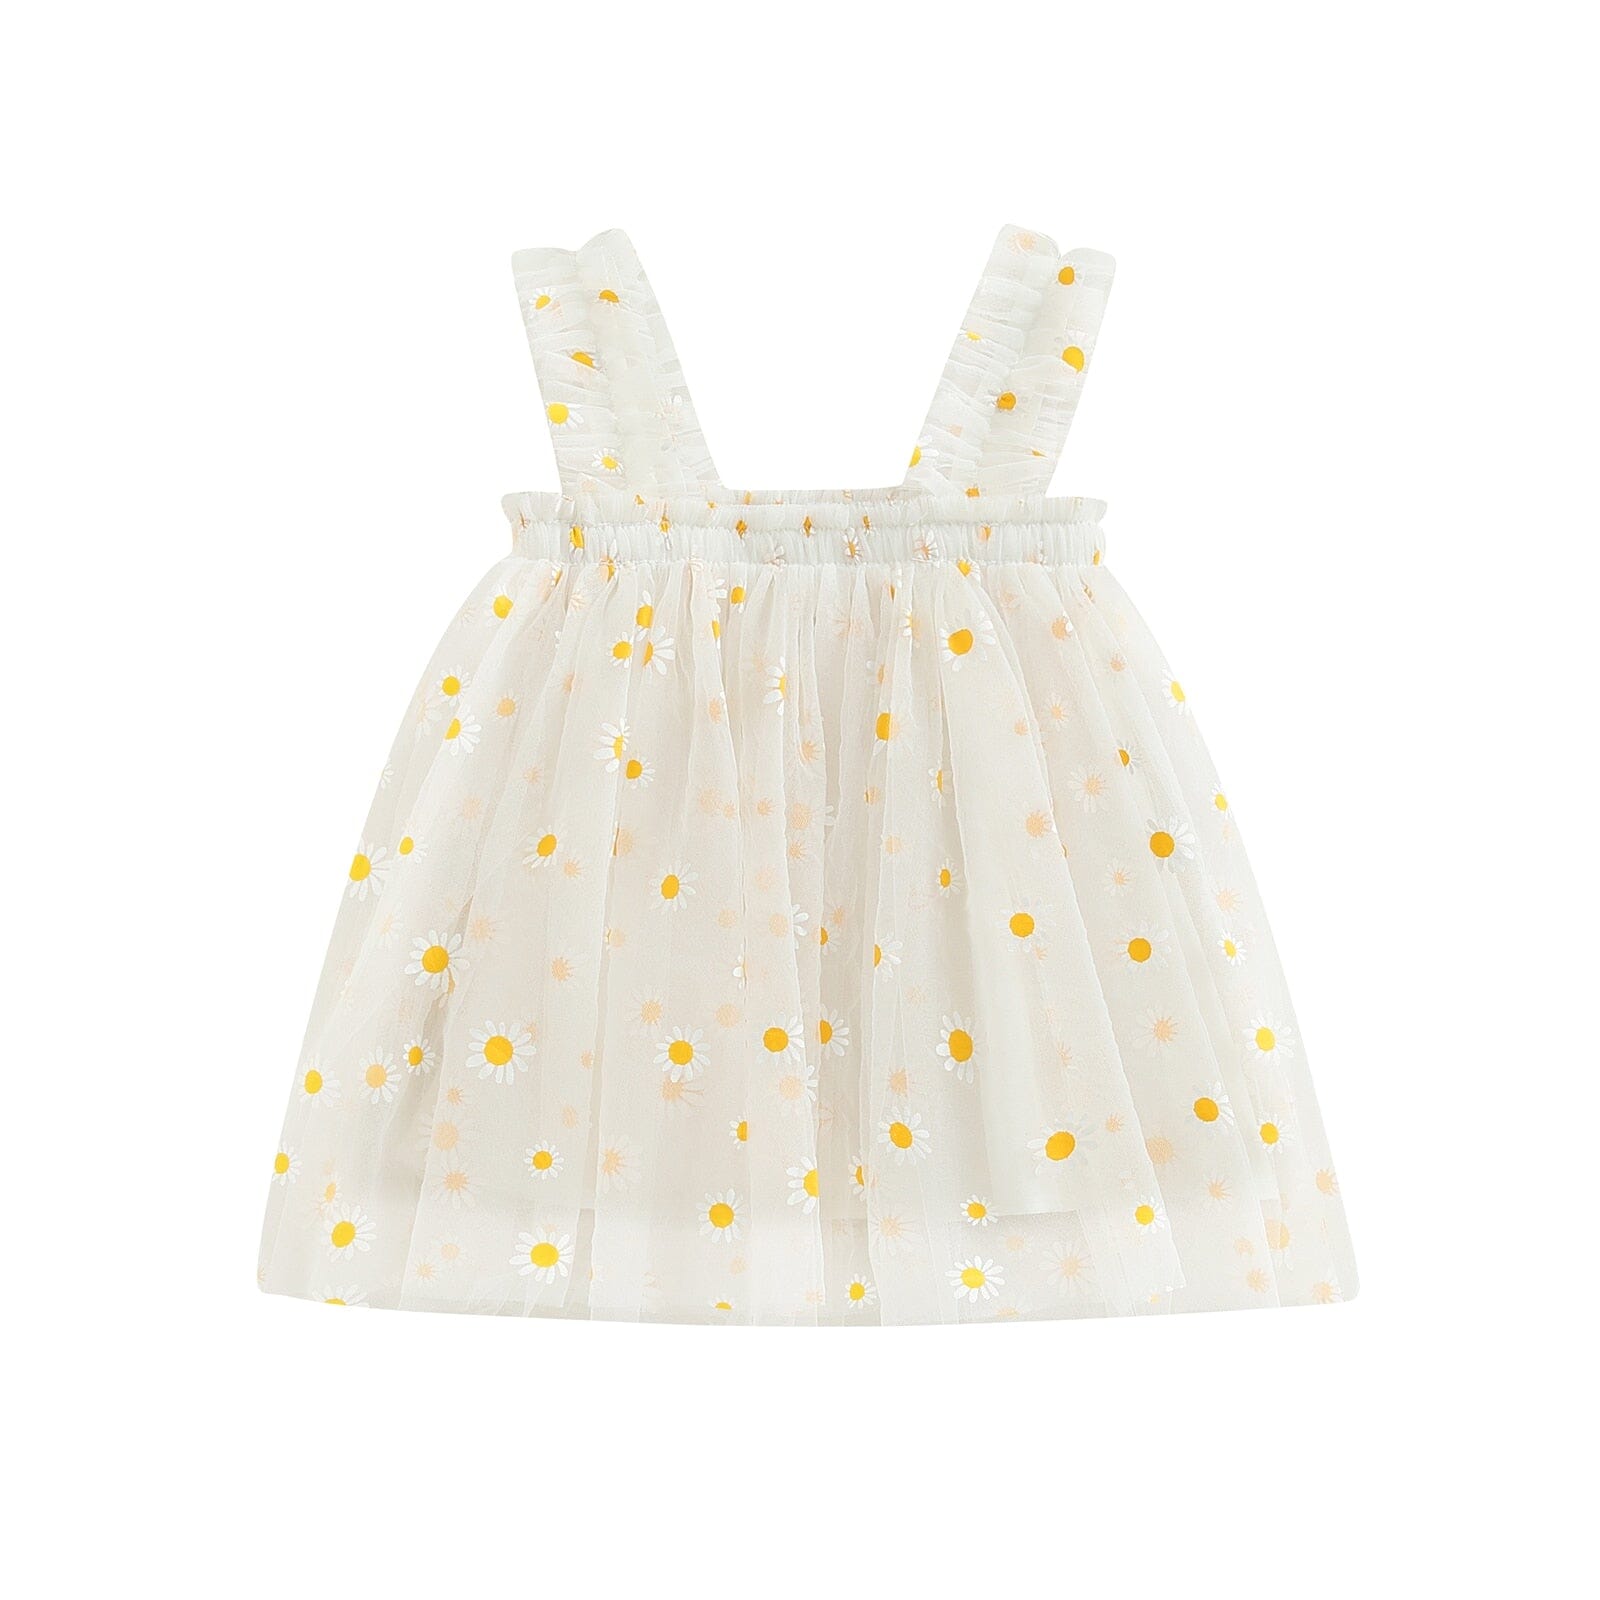 Vestido Infantil Tule Margaridas Loja Click Certo Branco 1-2 Anos 